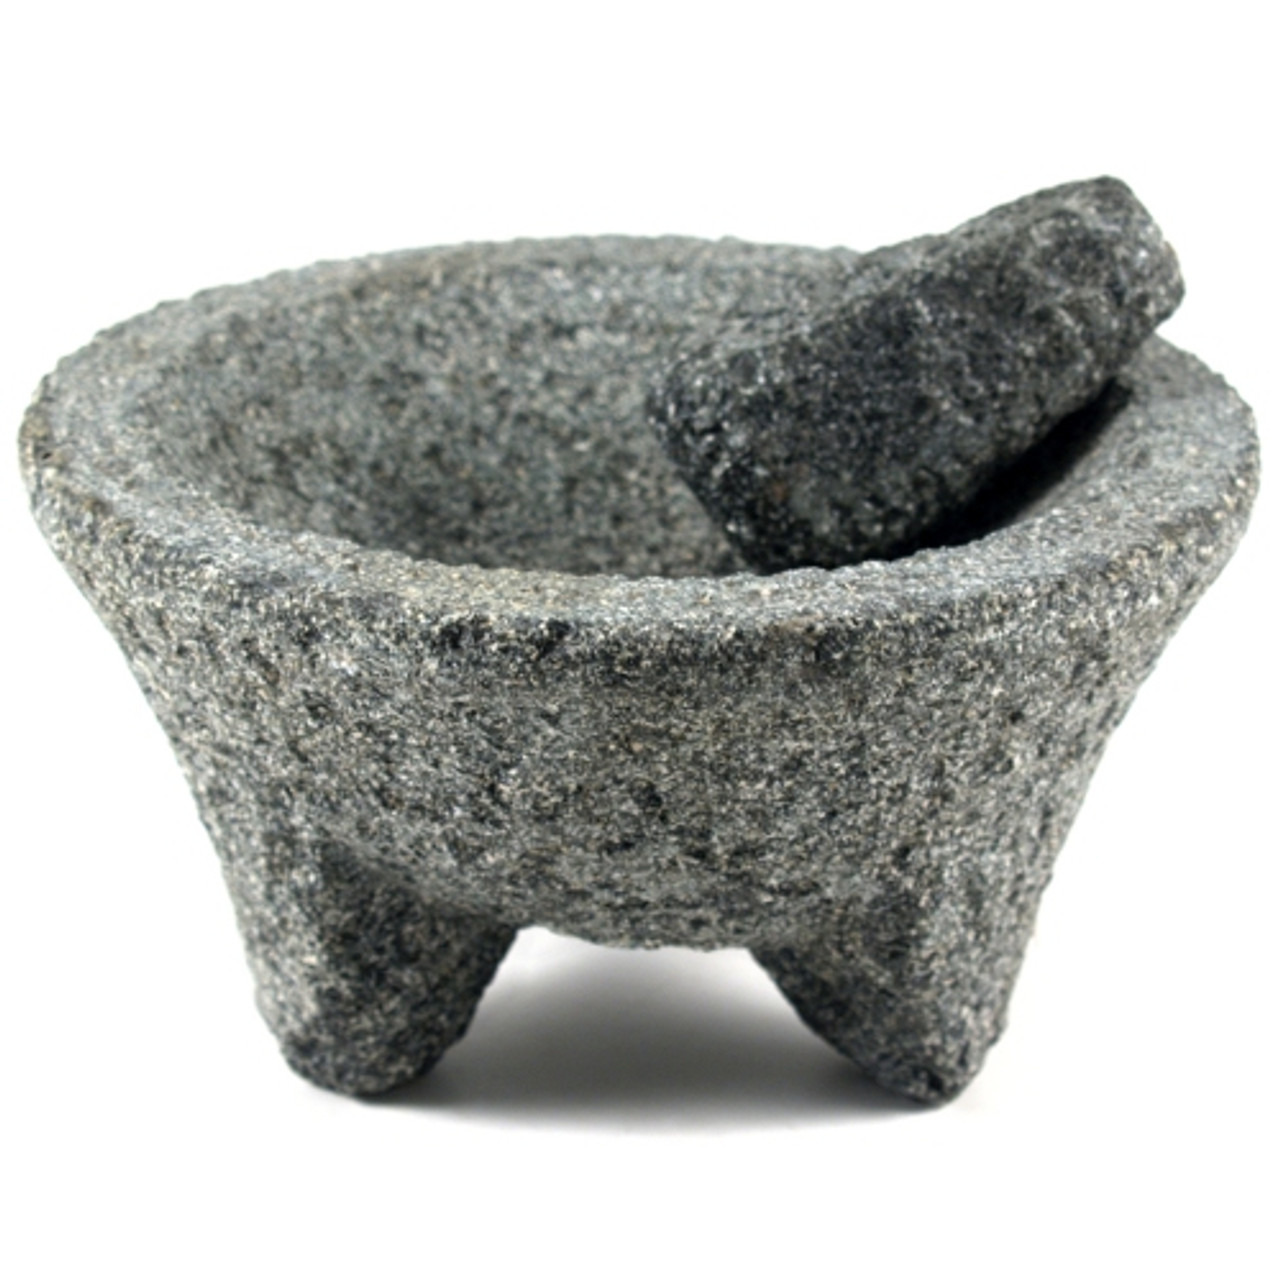 Volcanic Stone Mortar and Pestle molli-caxitl Classic Design Salsa